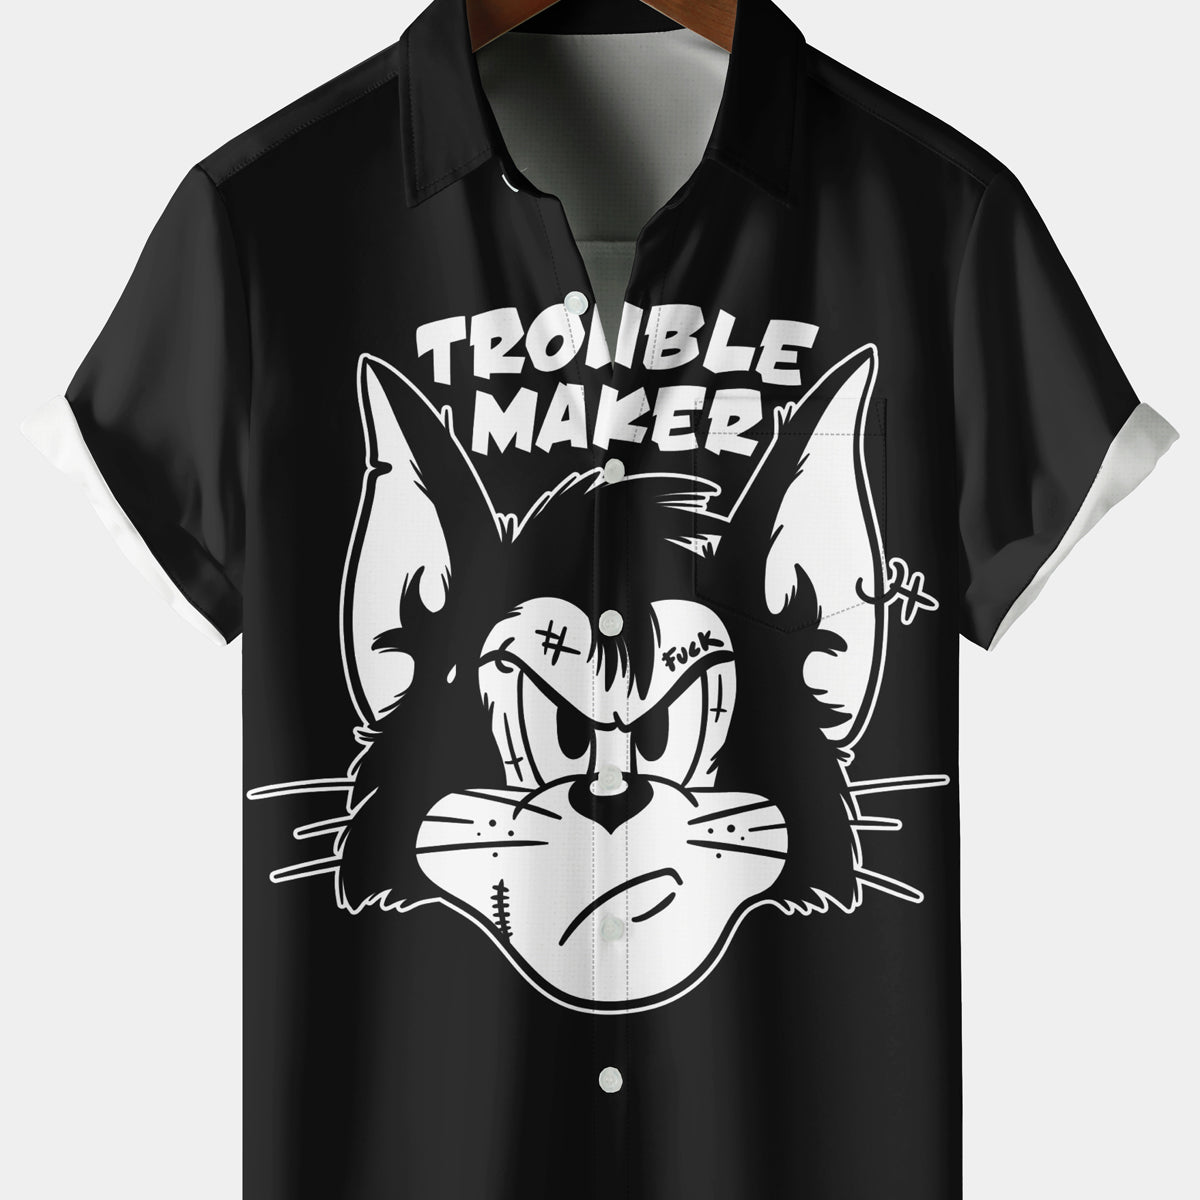 Men's Casual Cat Chest Pocket Black Short Sleeve Shirt